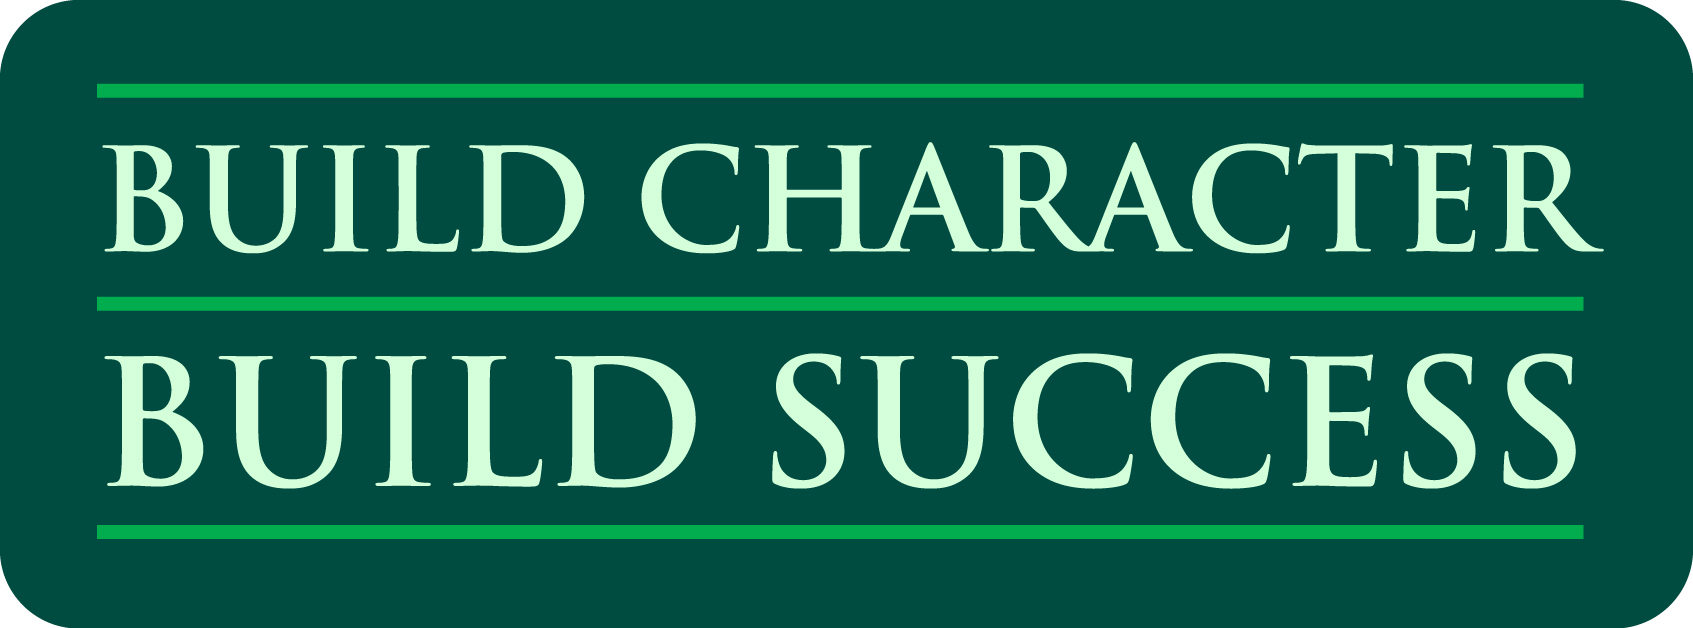 Build Character build success